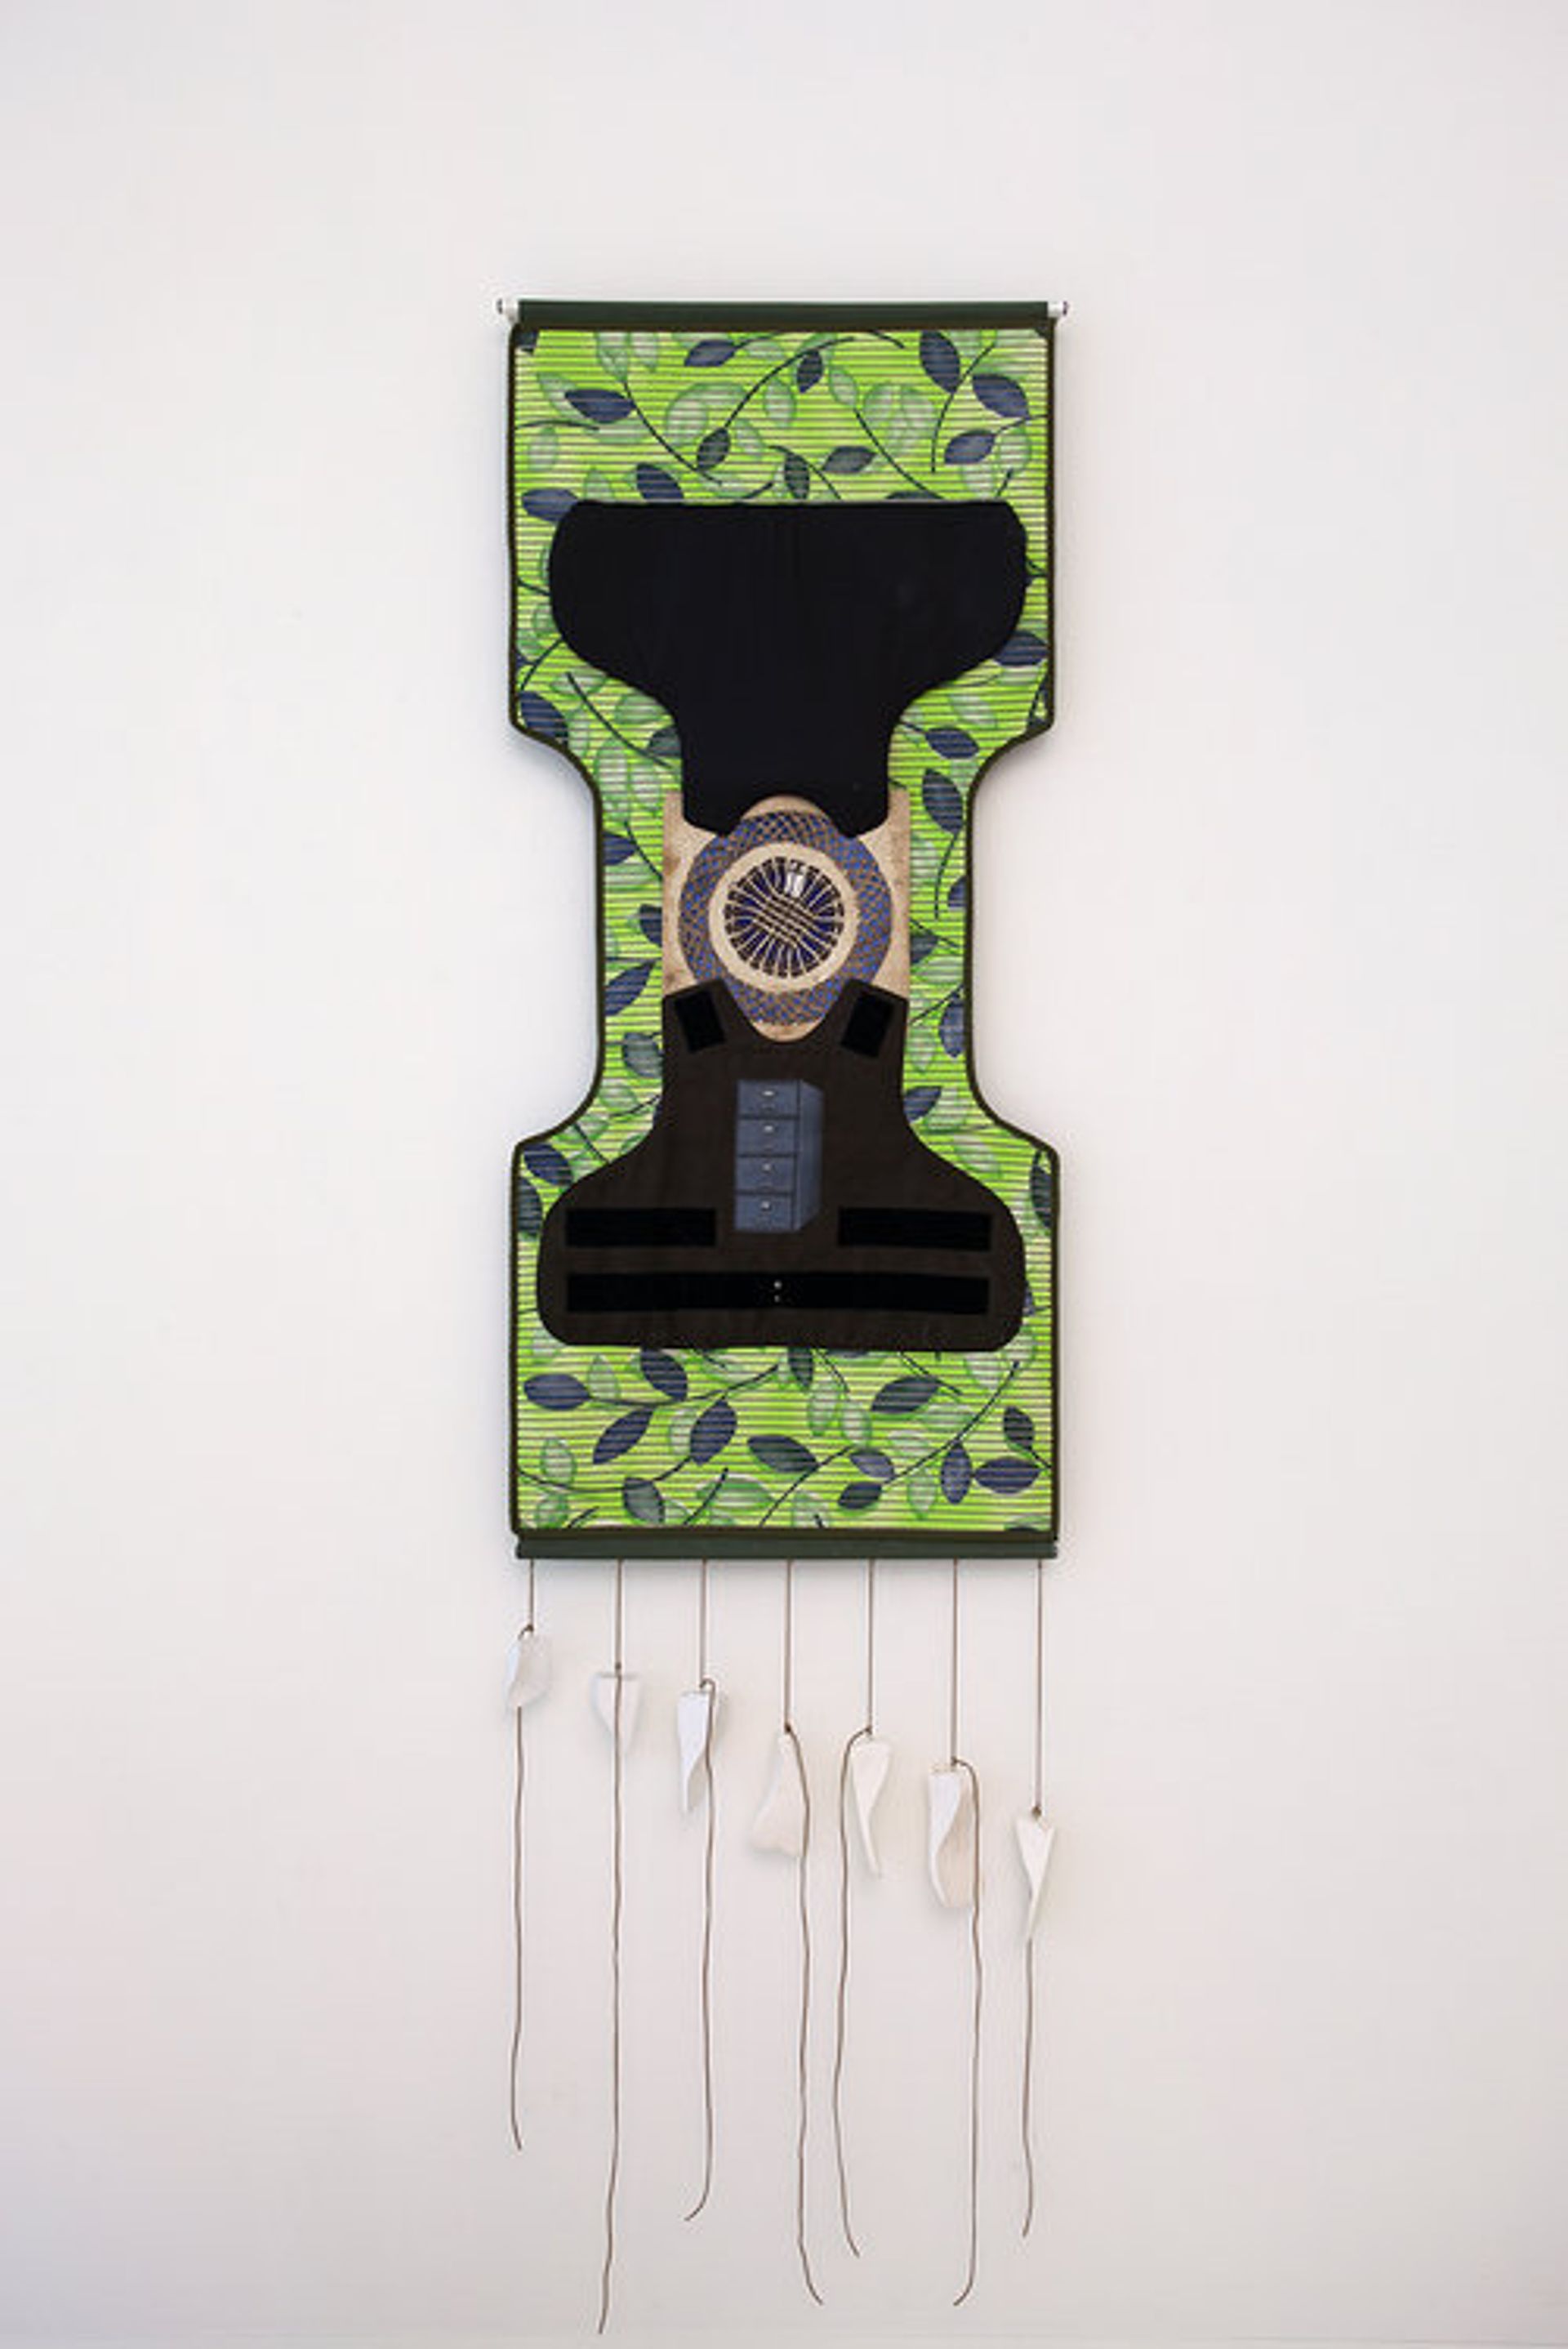 Ana Navas, United, 2018, mat, plaster, textile, paper, metal, 193 × 65 cm